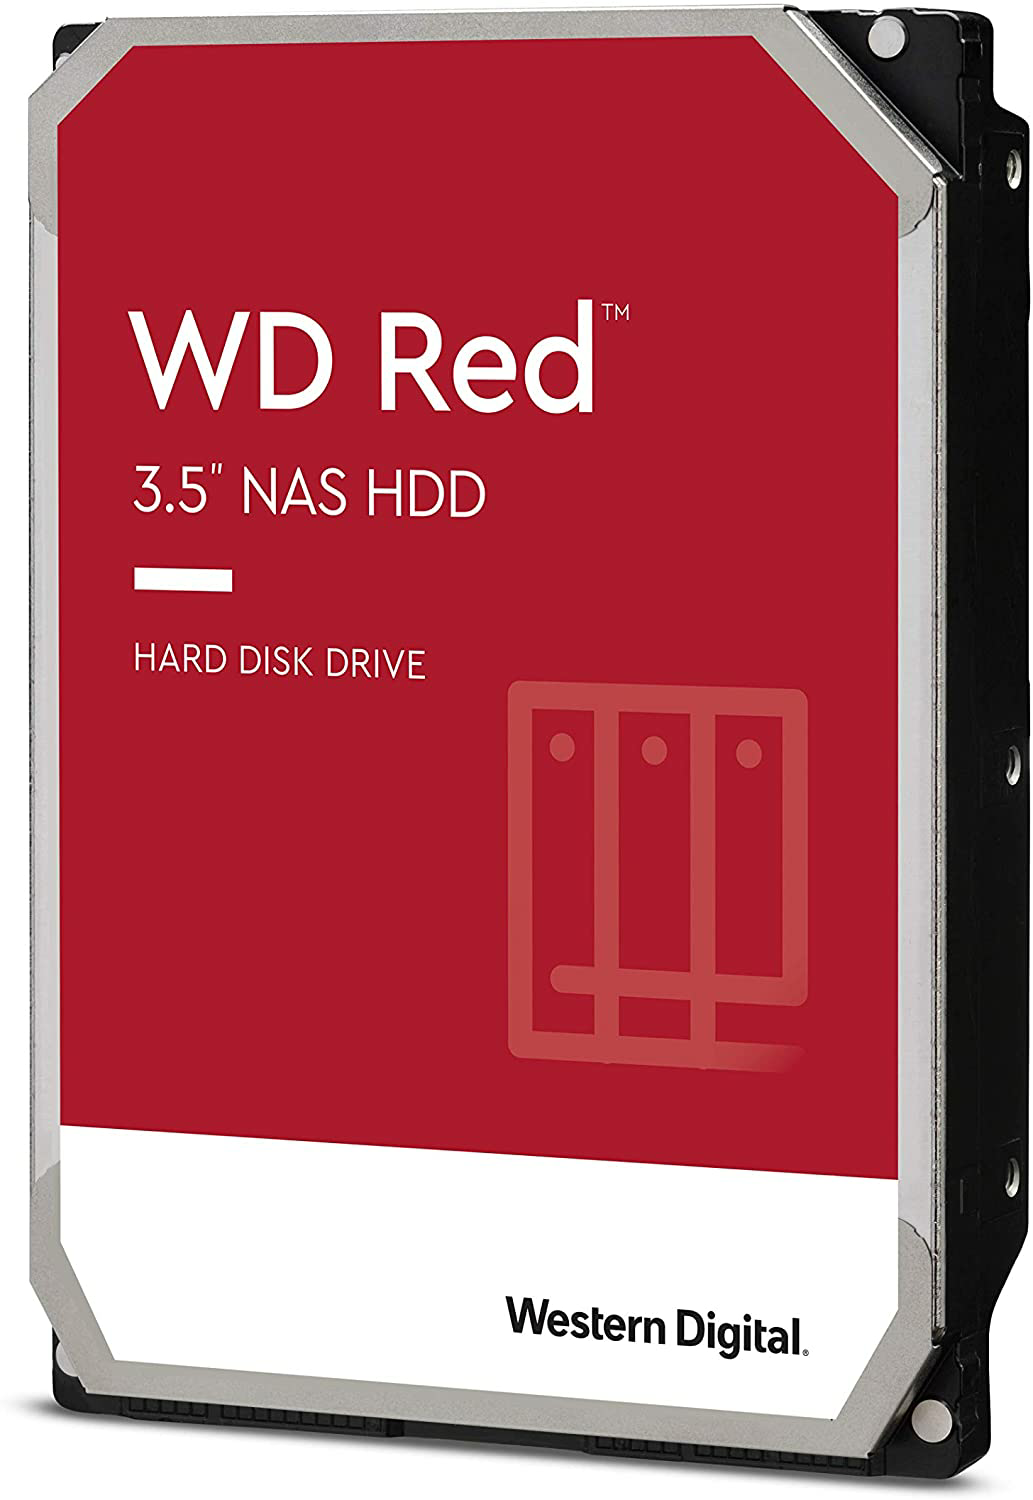 Amazon.com: Western Digital 4TB WD Red NAS Internal Hard Drive HDD - 5400 RPM, SATA 6 Gb/s, SMR, 256MB Cache, 3.5" - WD40EFAX : Electronics $63.99